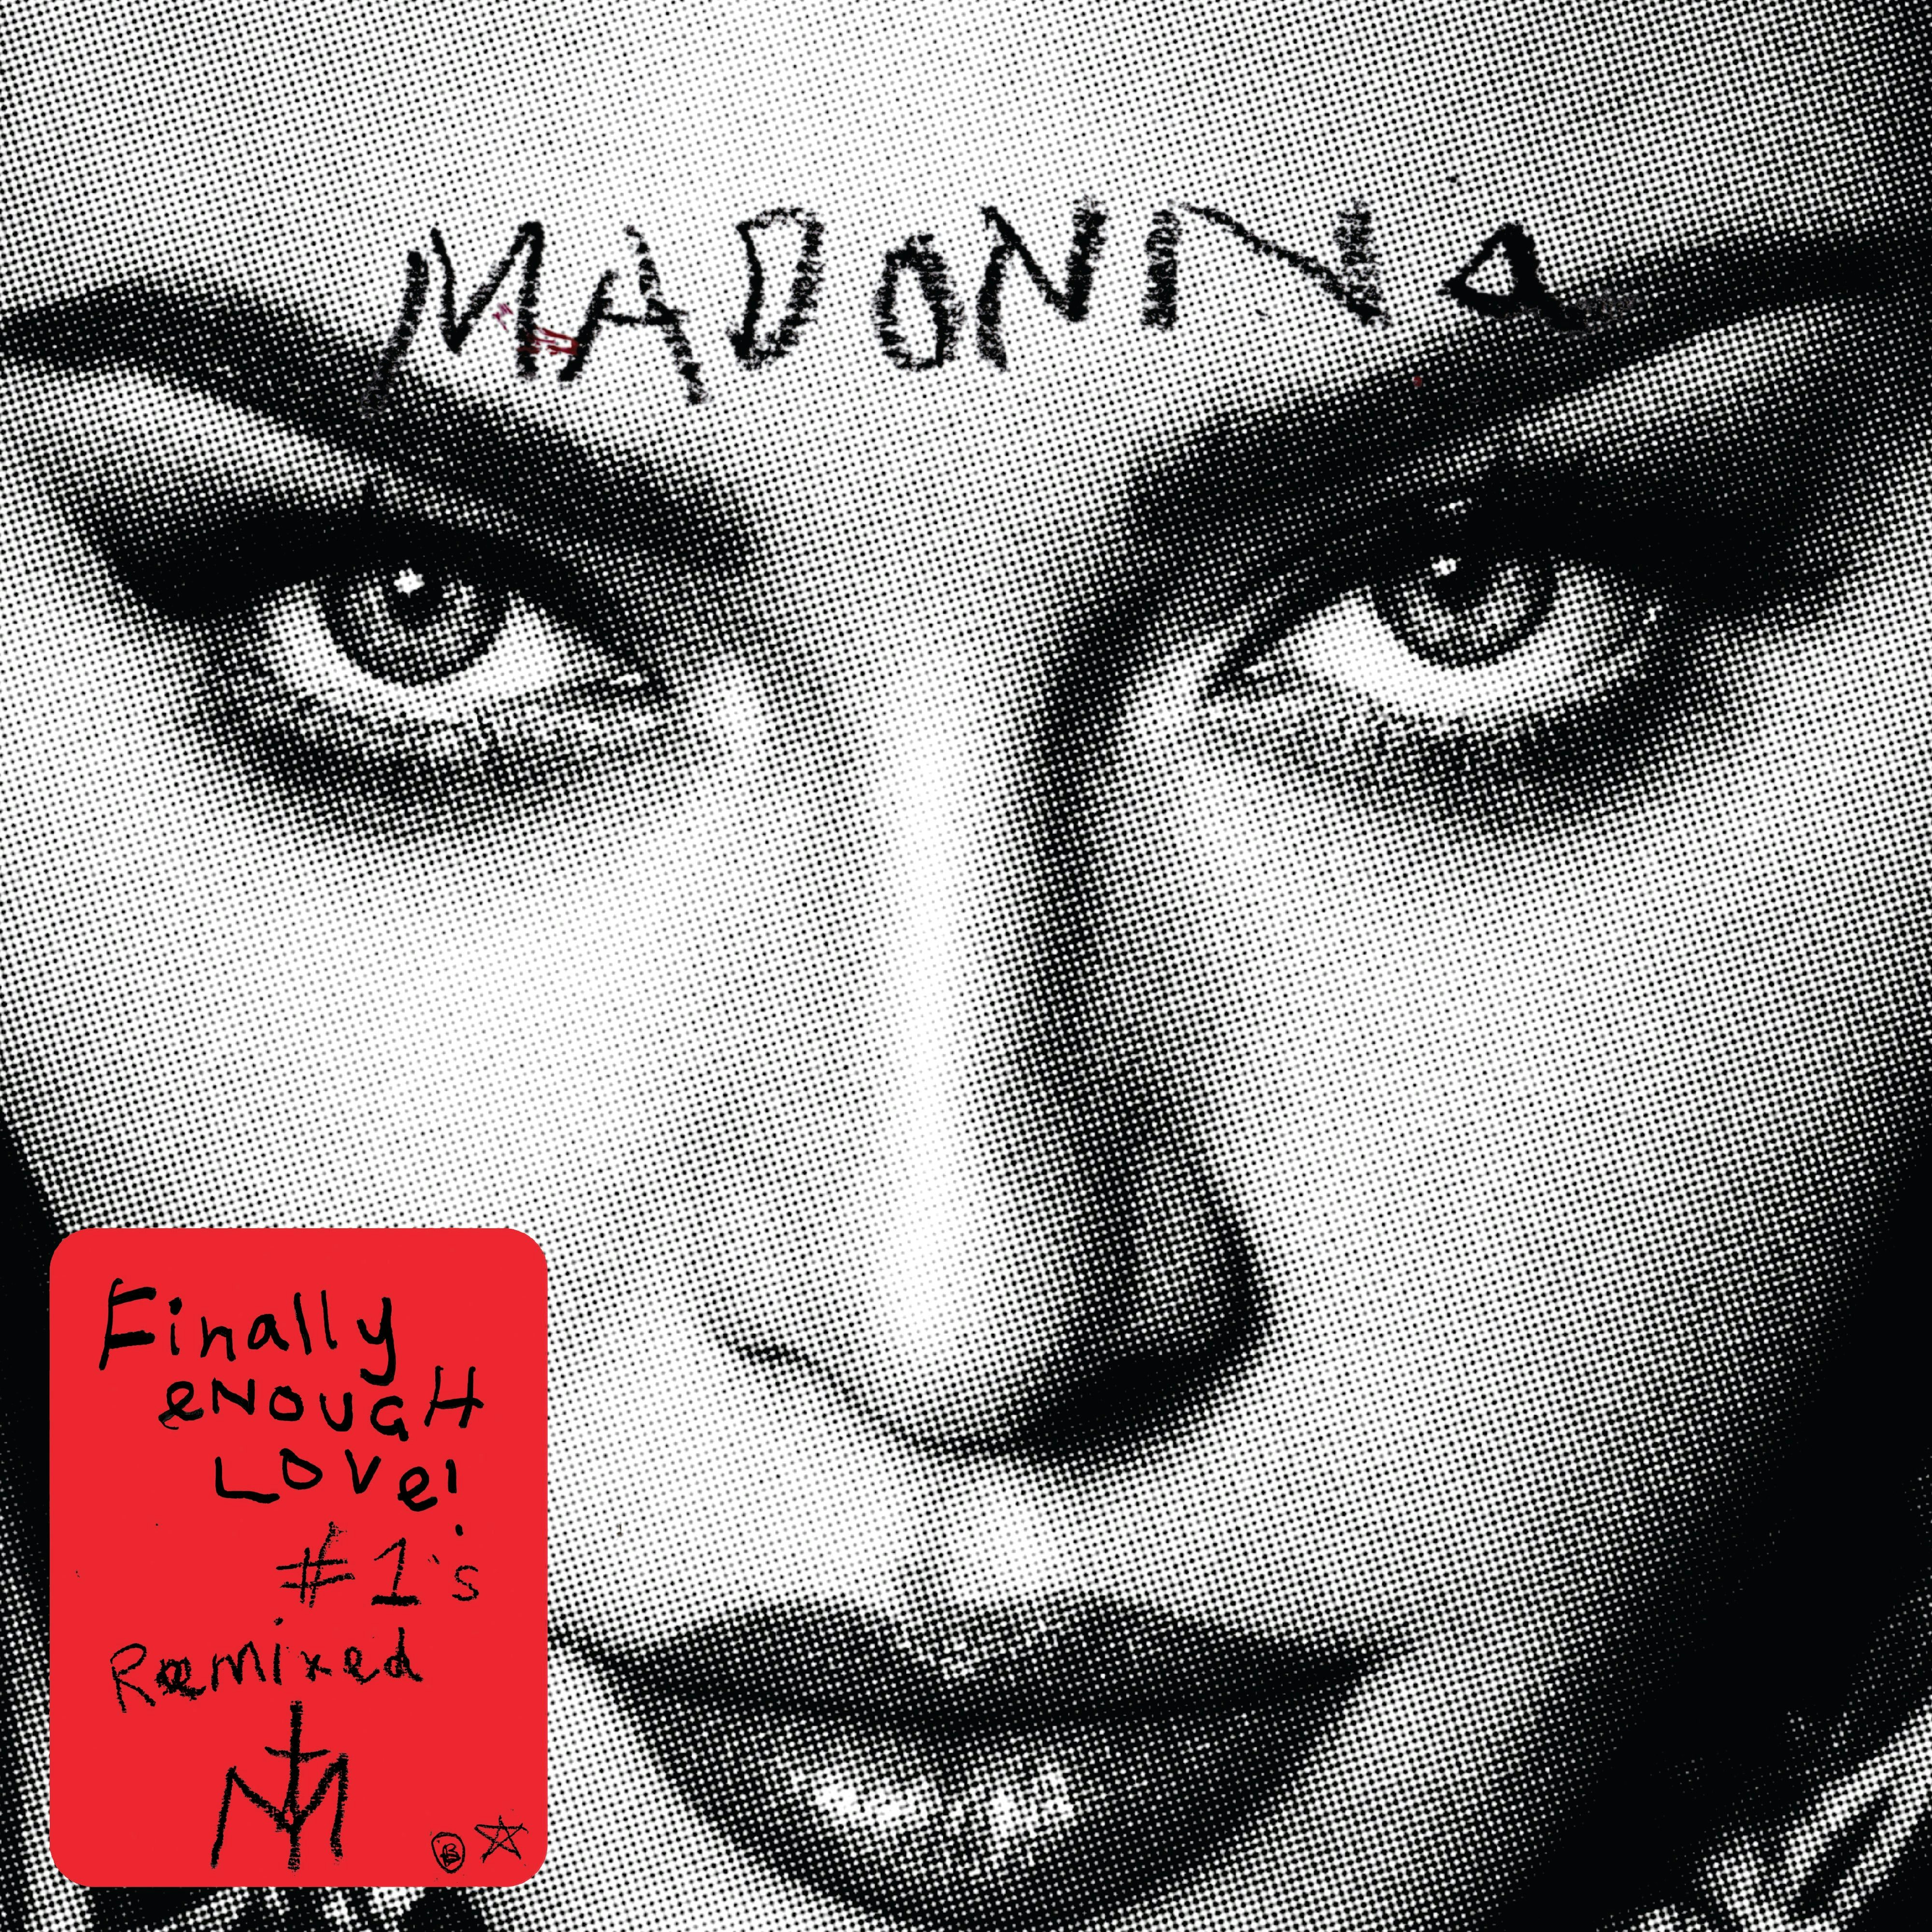 Madonna Finally Enough Love – Digital Album